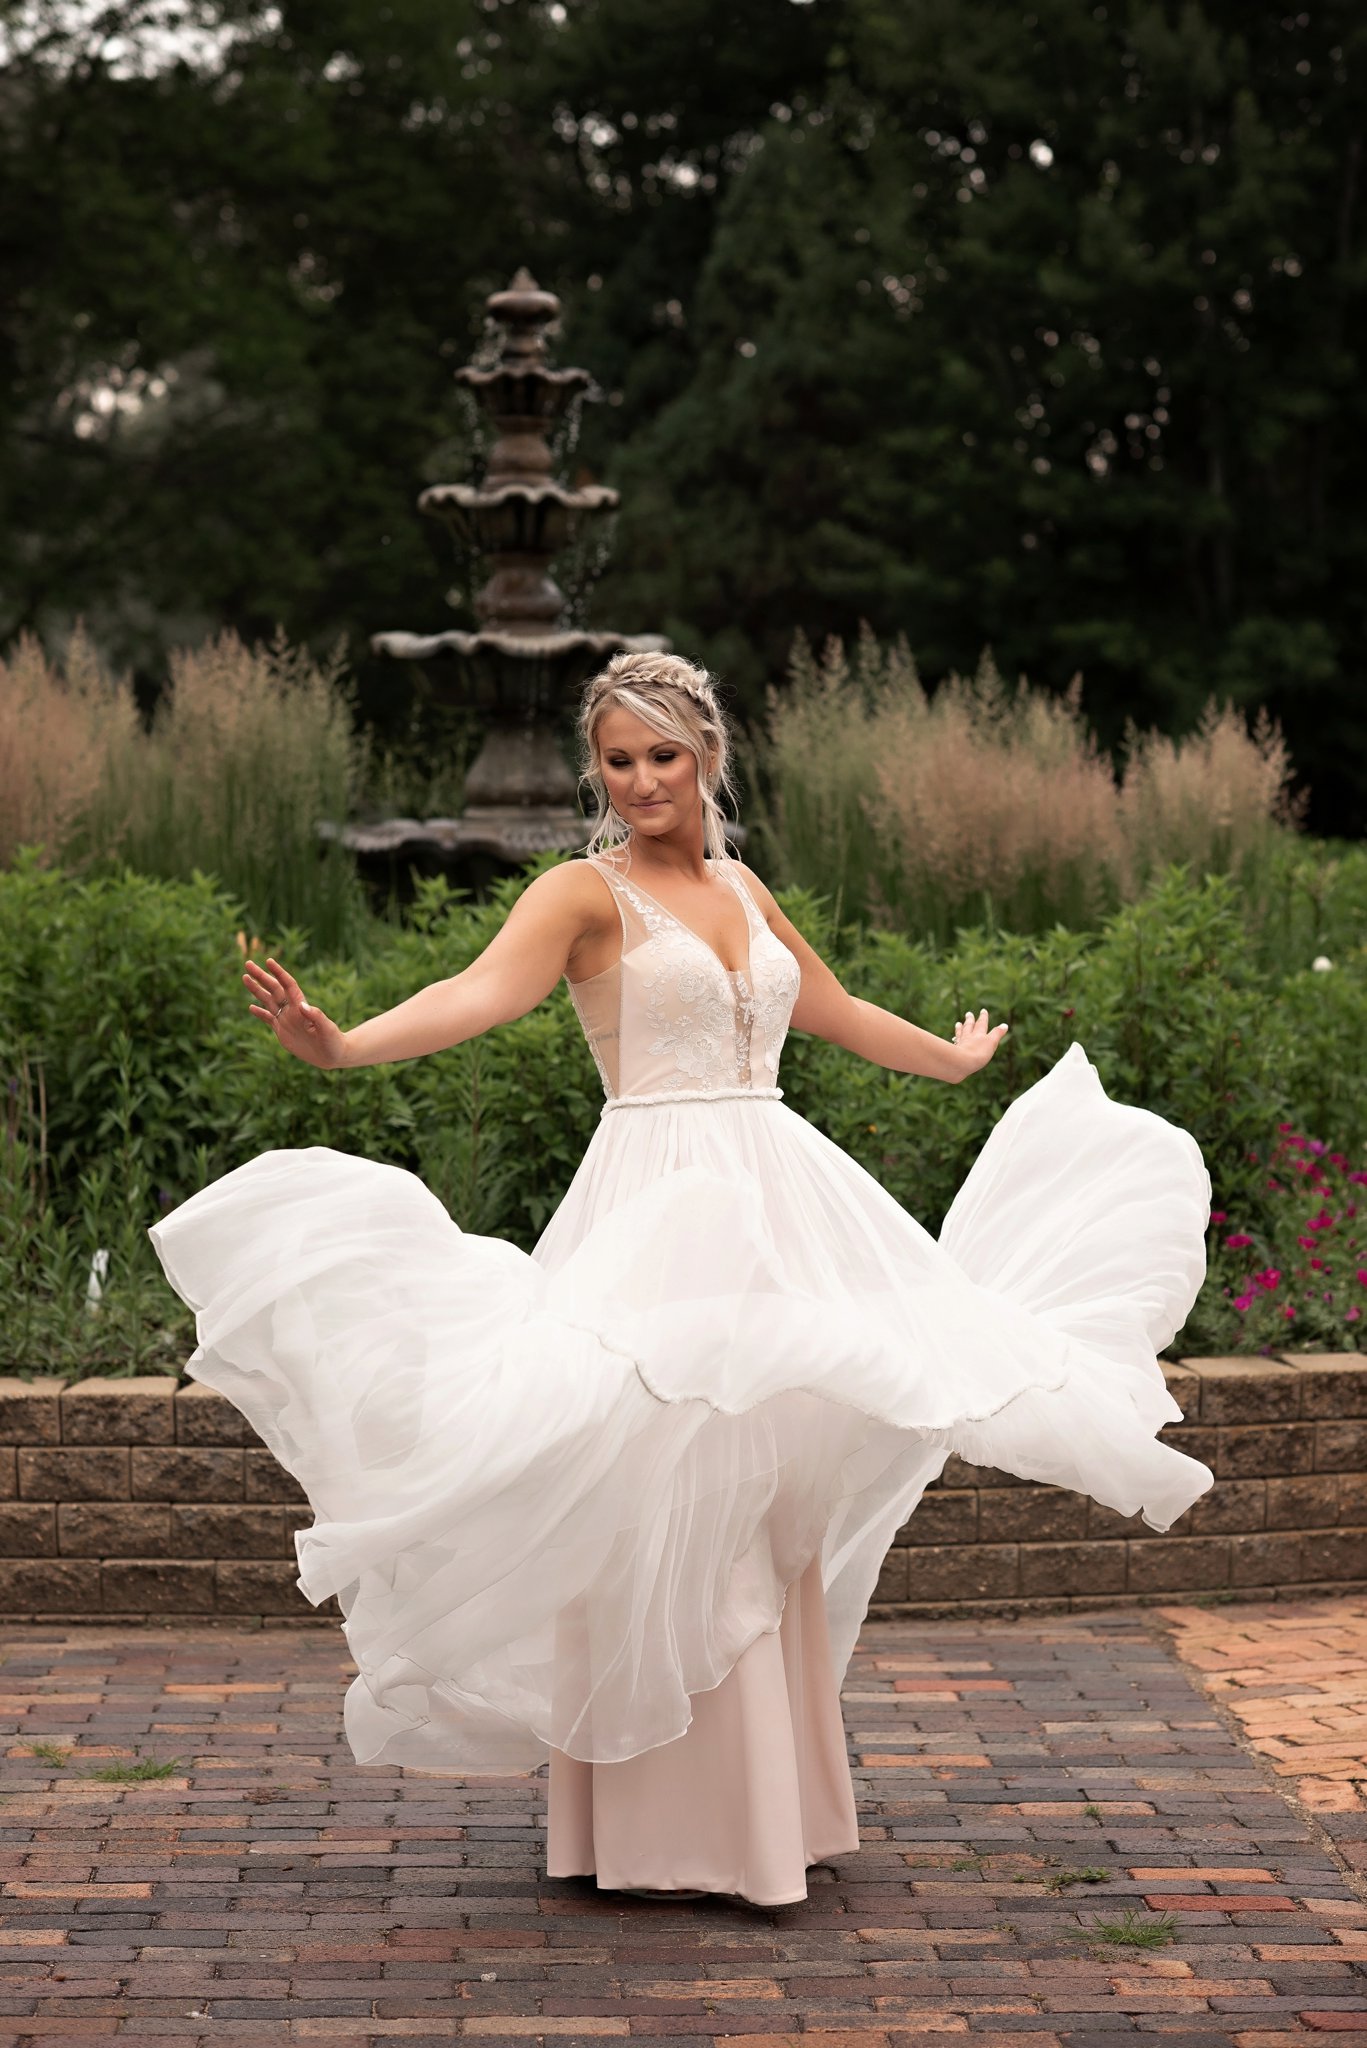 brides flowy dress spins in the air